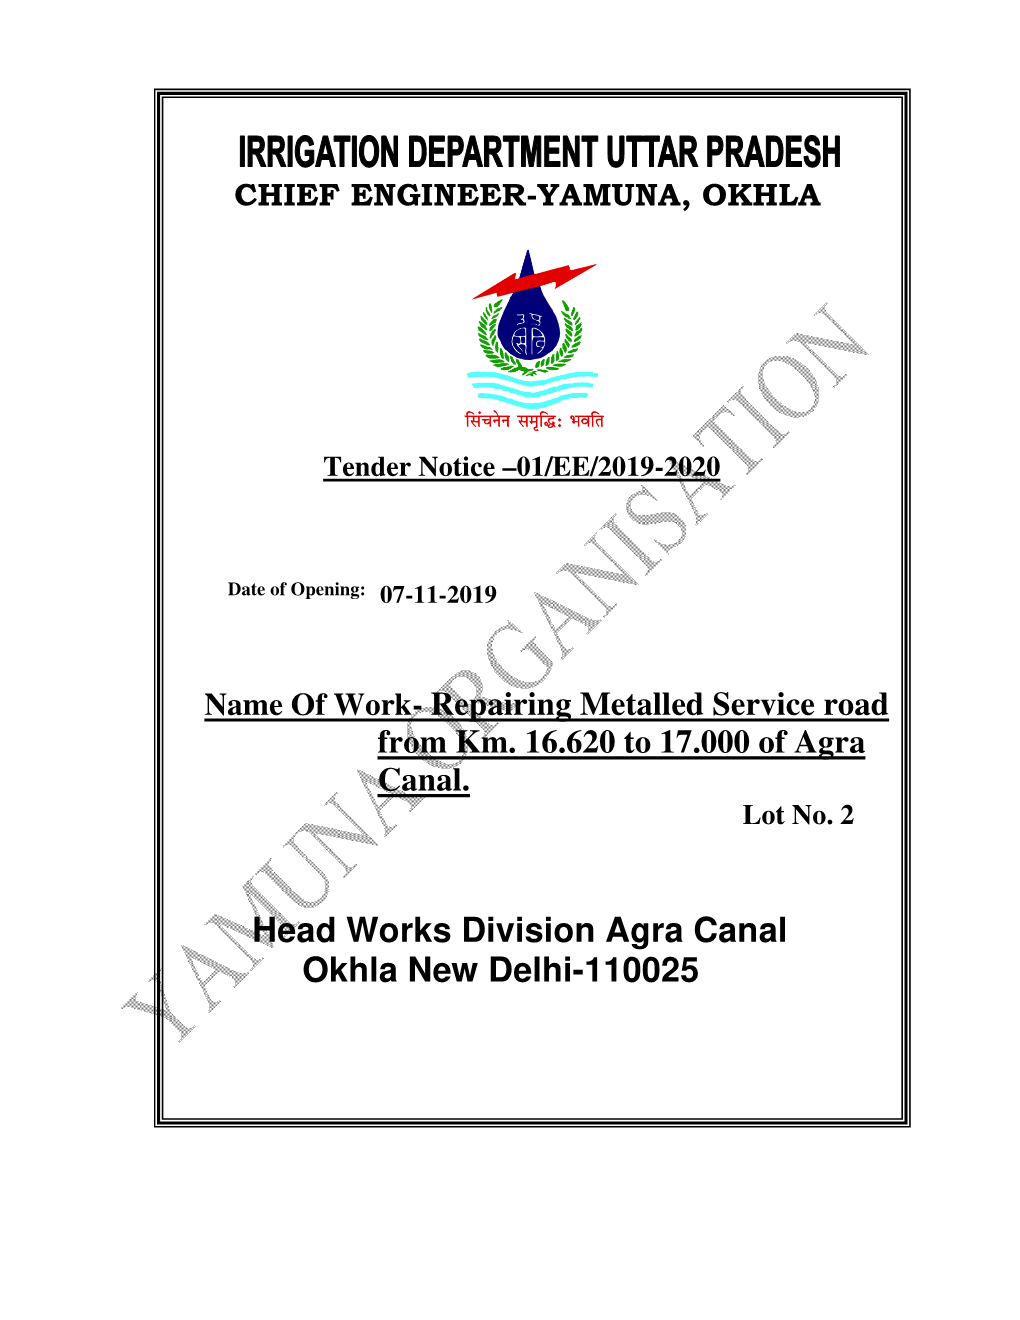 Head Works Division Agra Canal Okhla New Delhi-110025